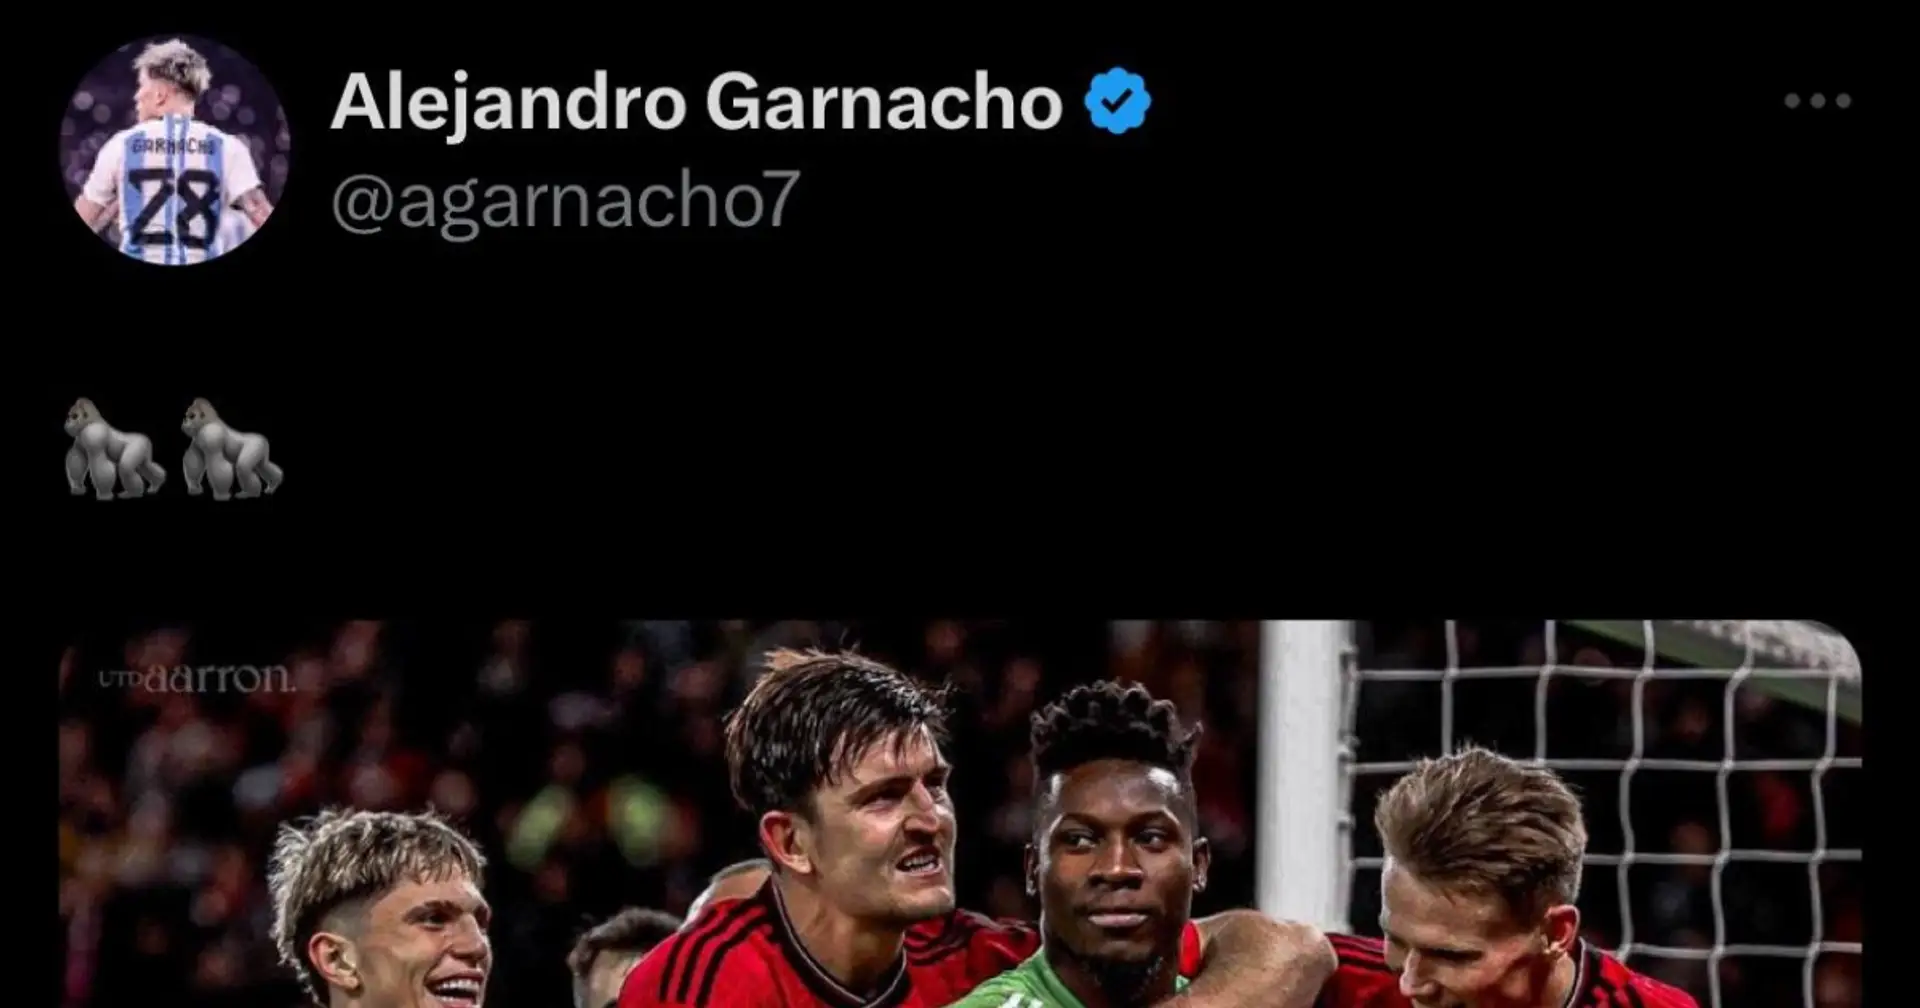 Alejandro Garnacho risks ban over now-deleted tweet with gorilla emojis